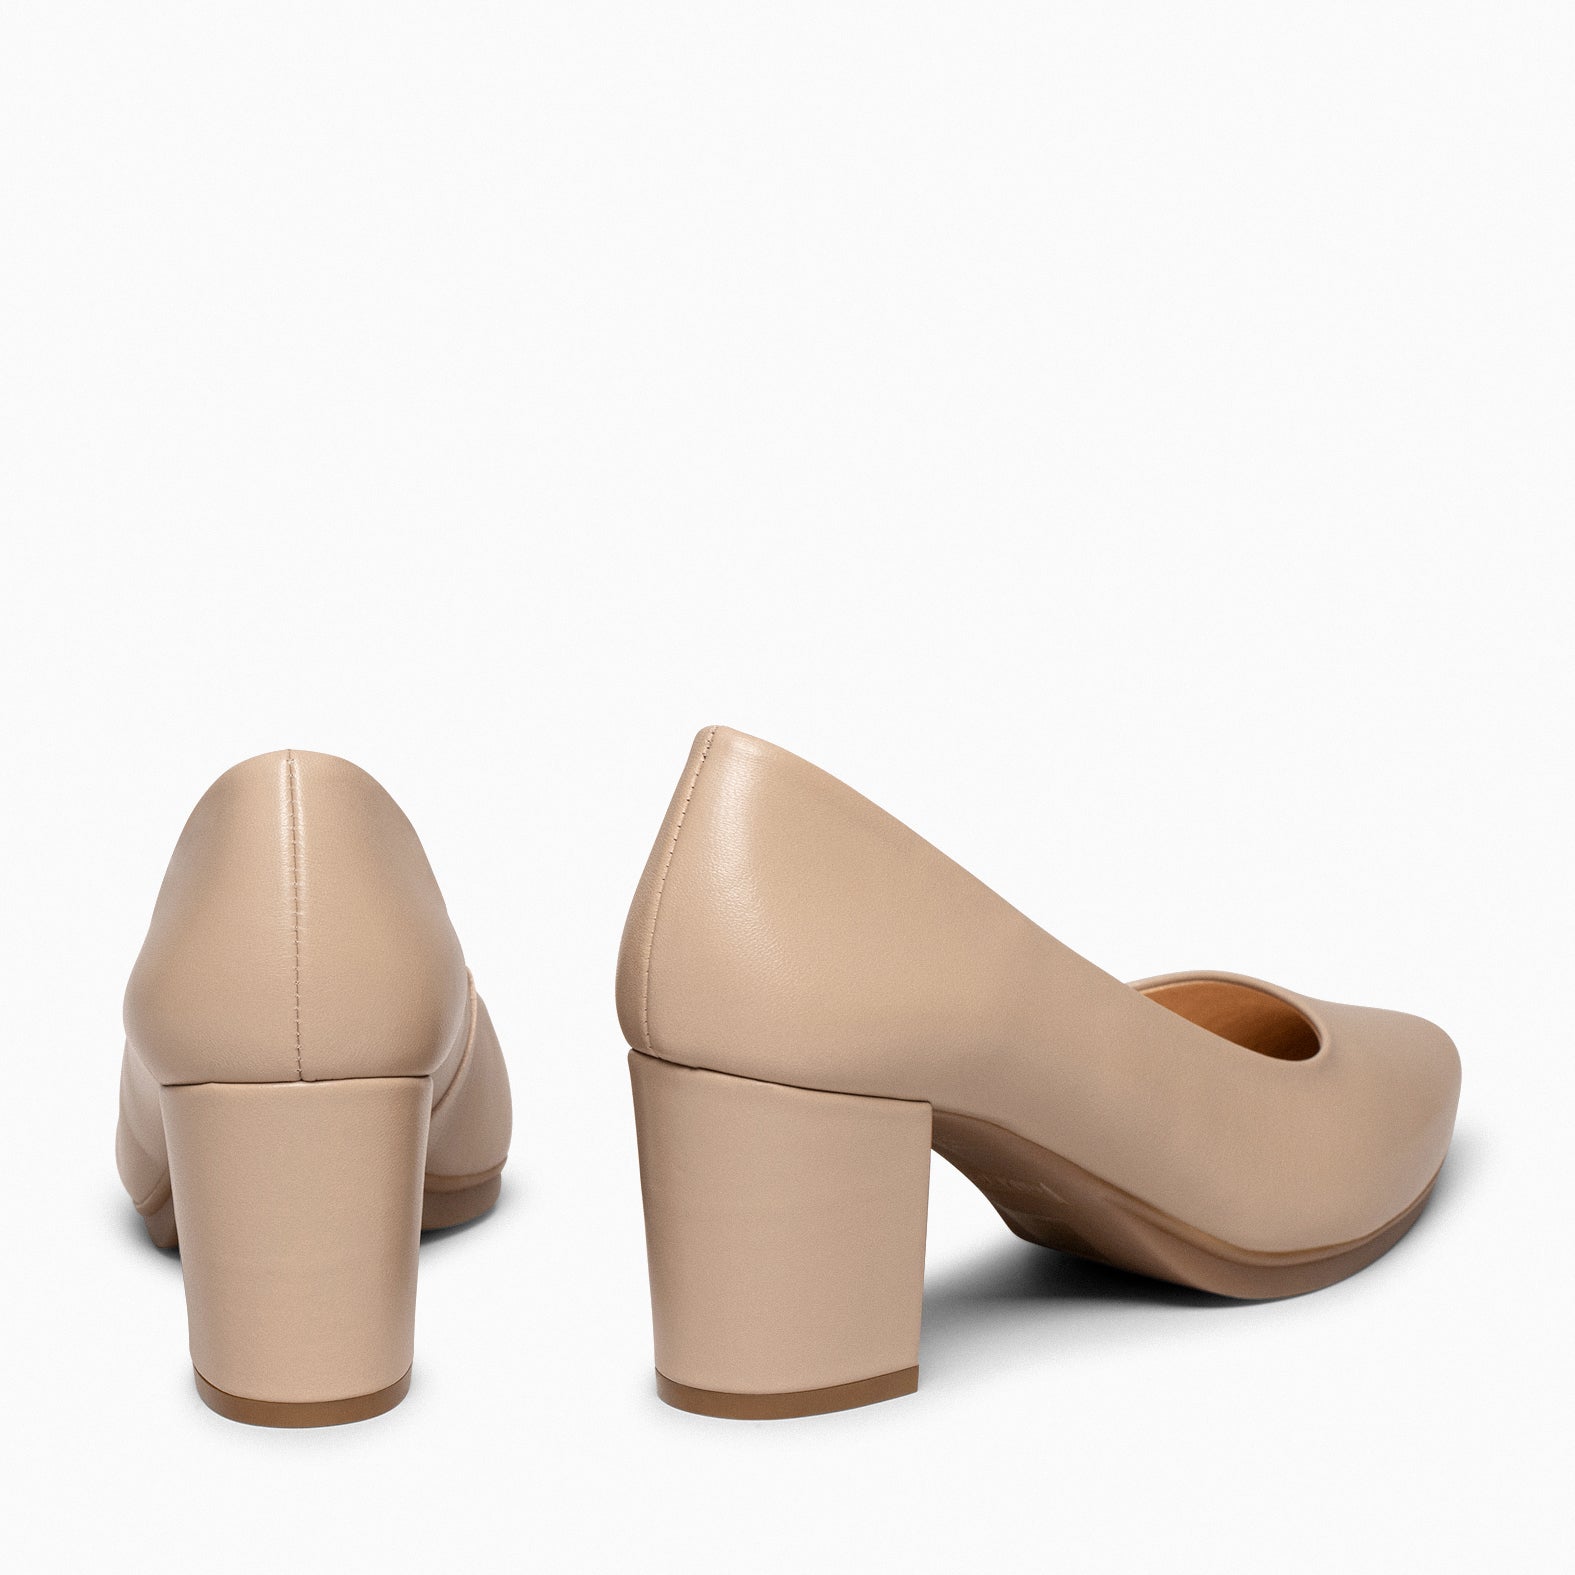 URBAN S SALON – TAN nappa leather mid heel